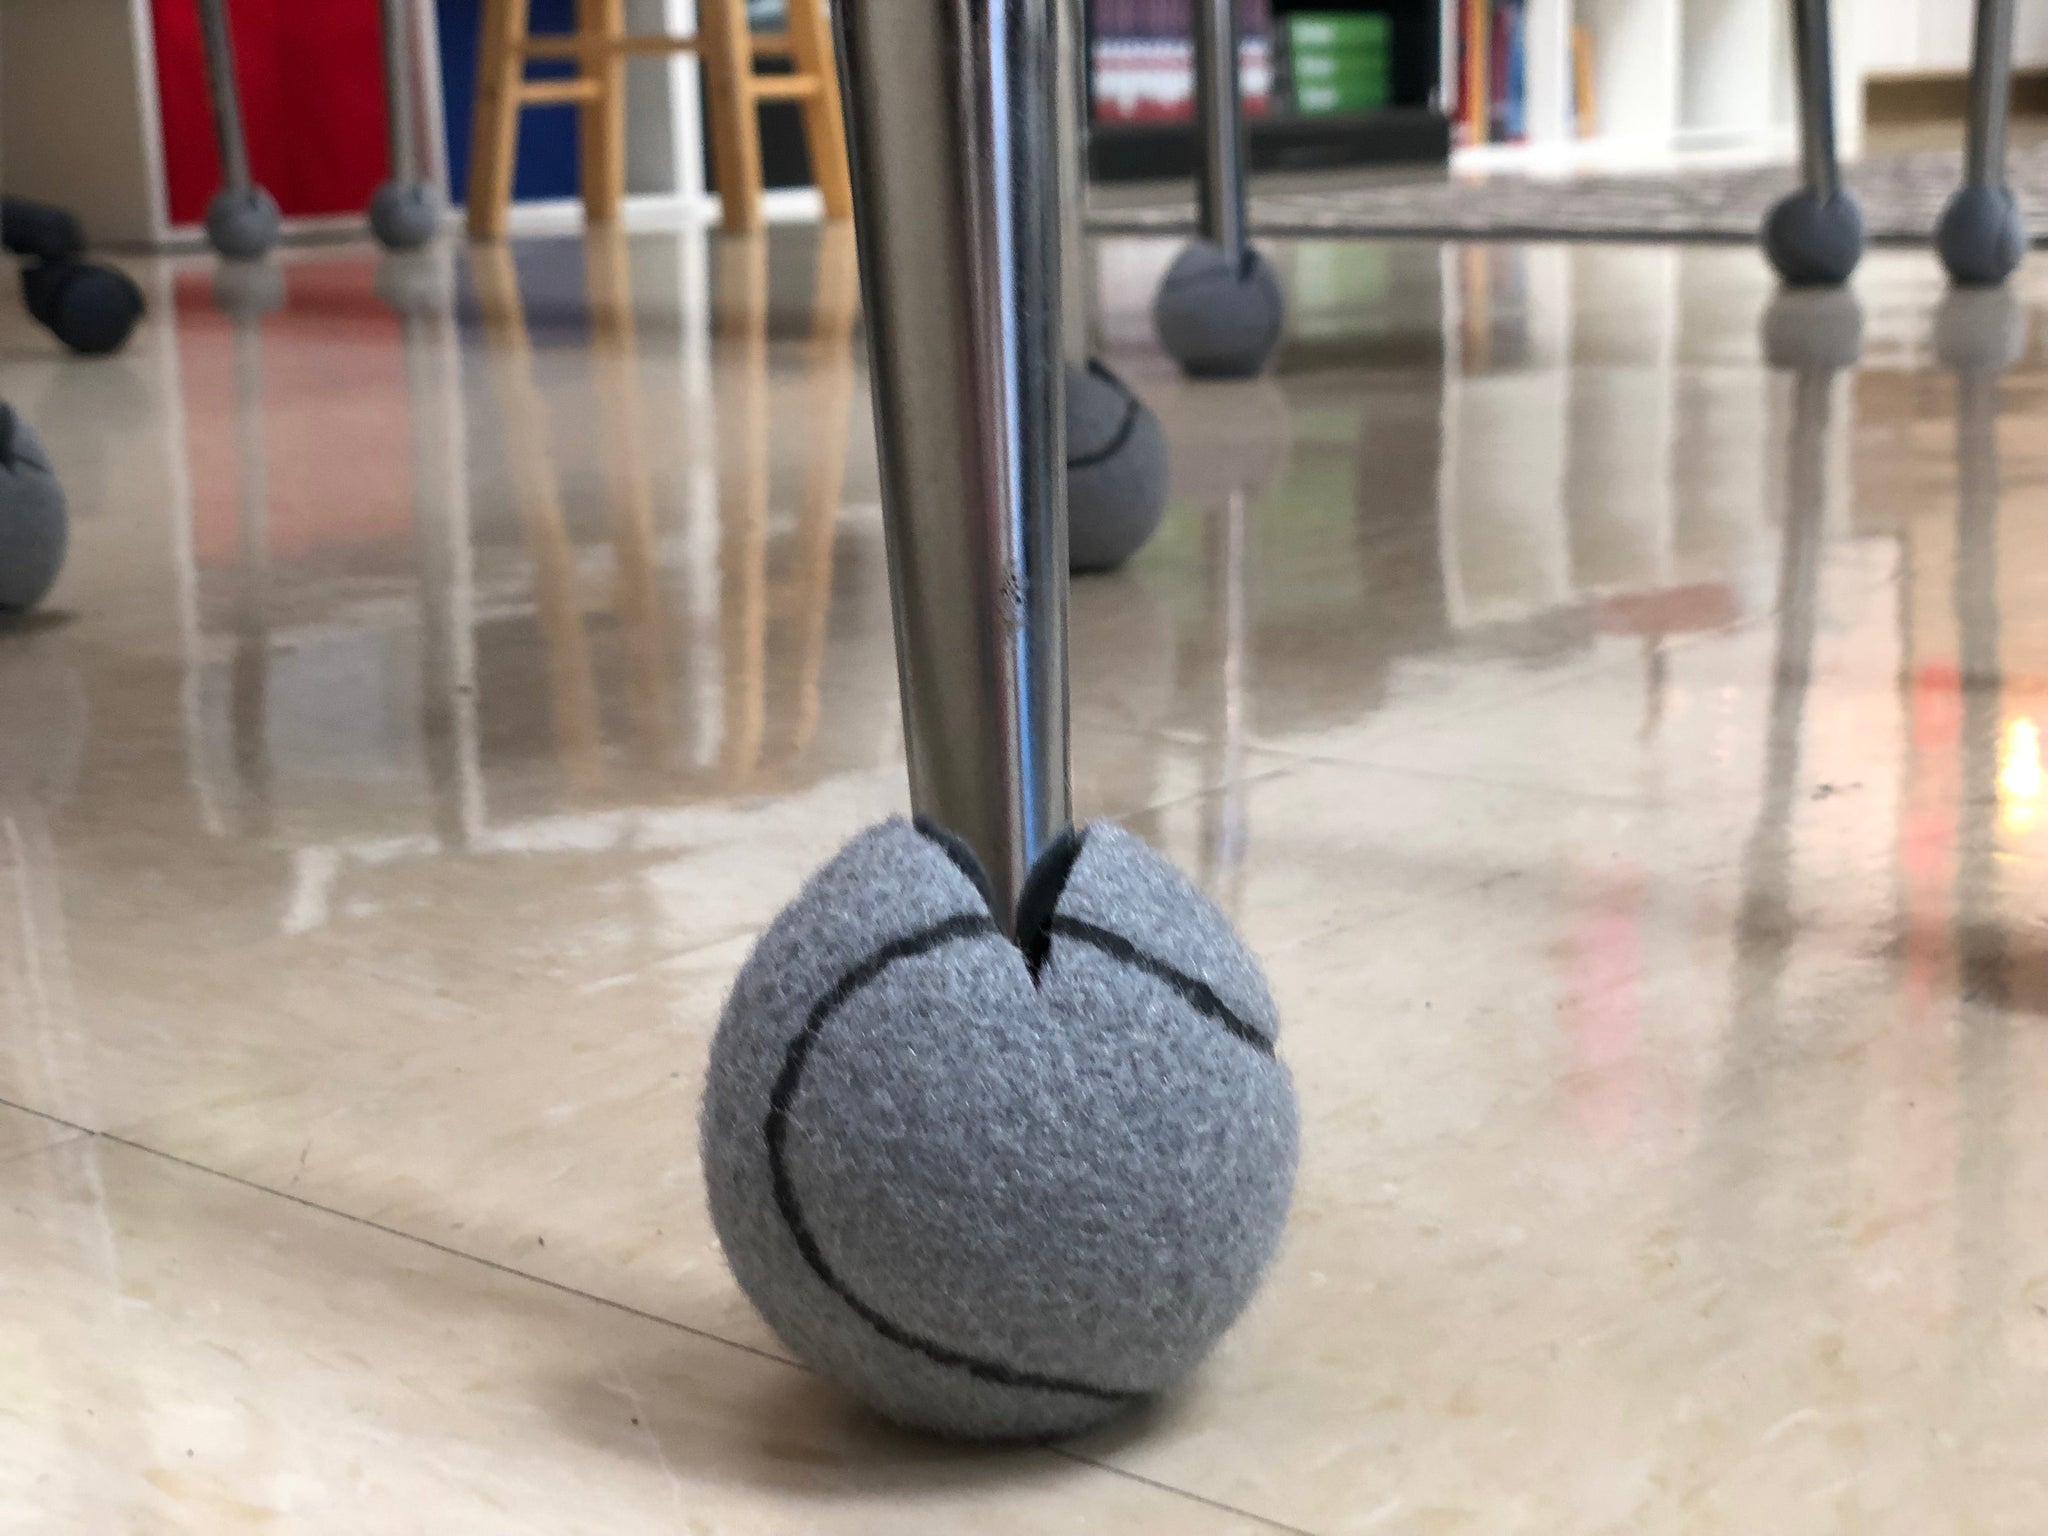 Medium Grey Furniture Balls (Racquetball Size) - 5000 Count